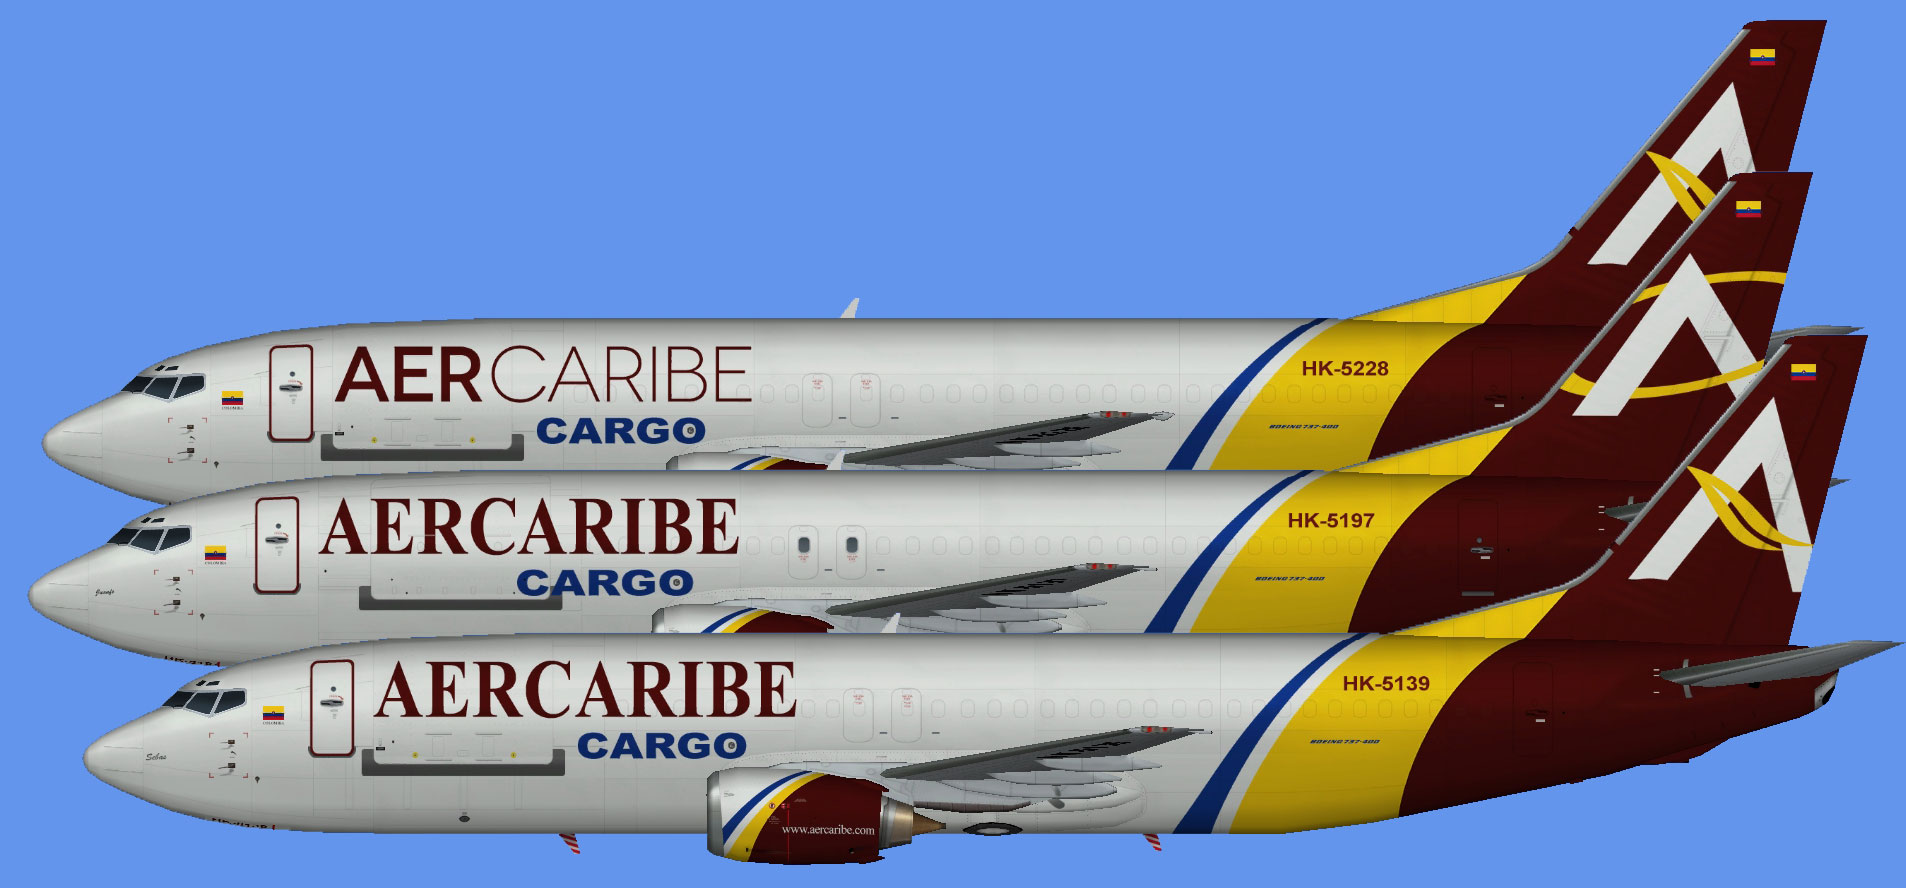 AerCaribe Boeing 737-400